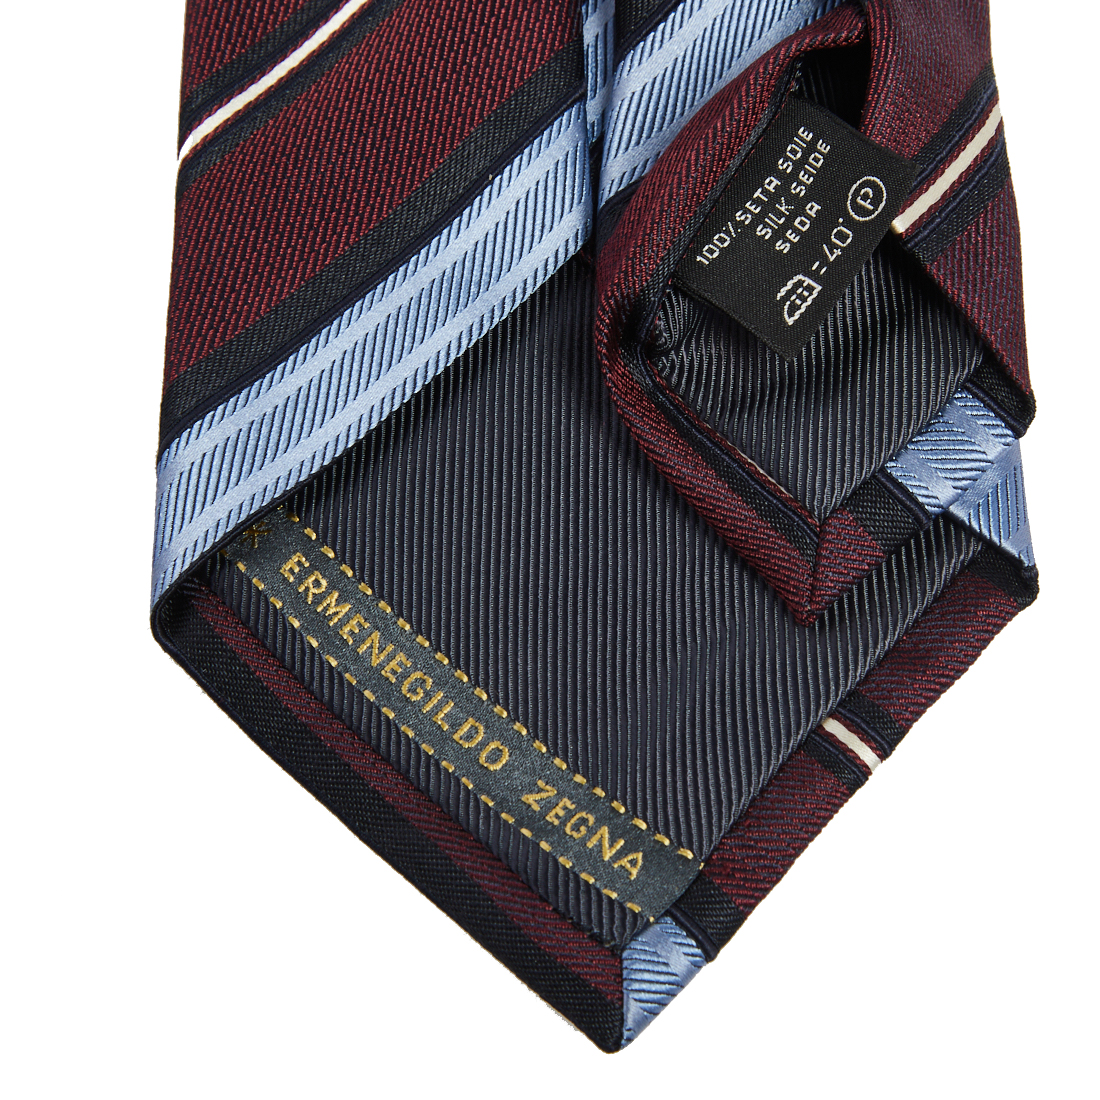 Ermenegildo Zegna Bicolor Striped Silk Tie